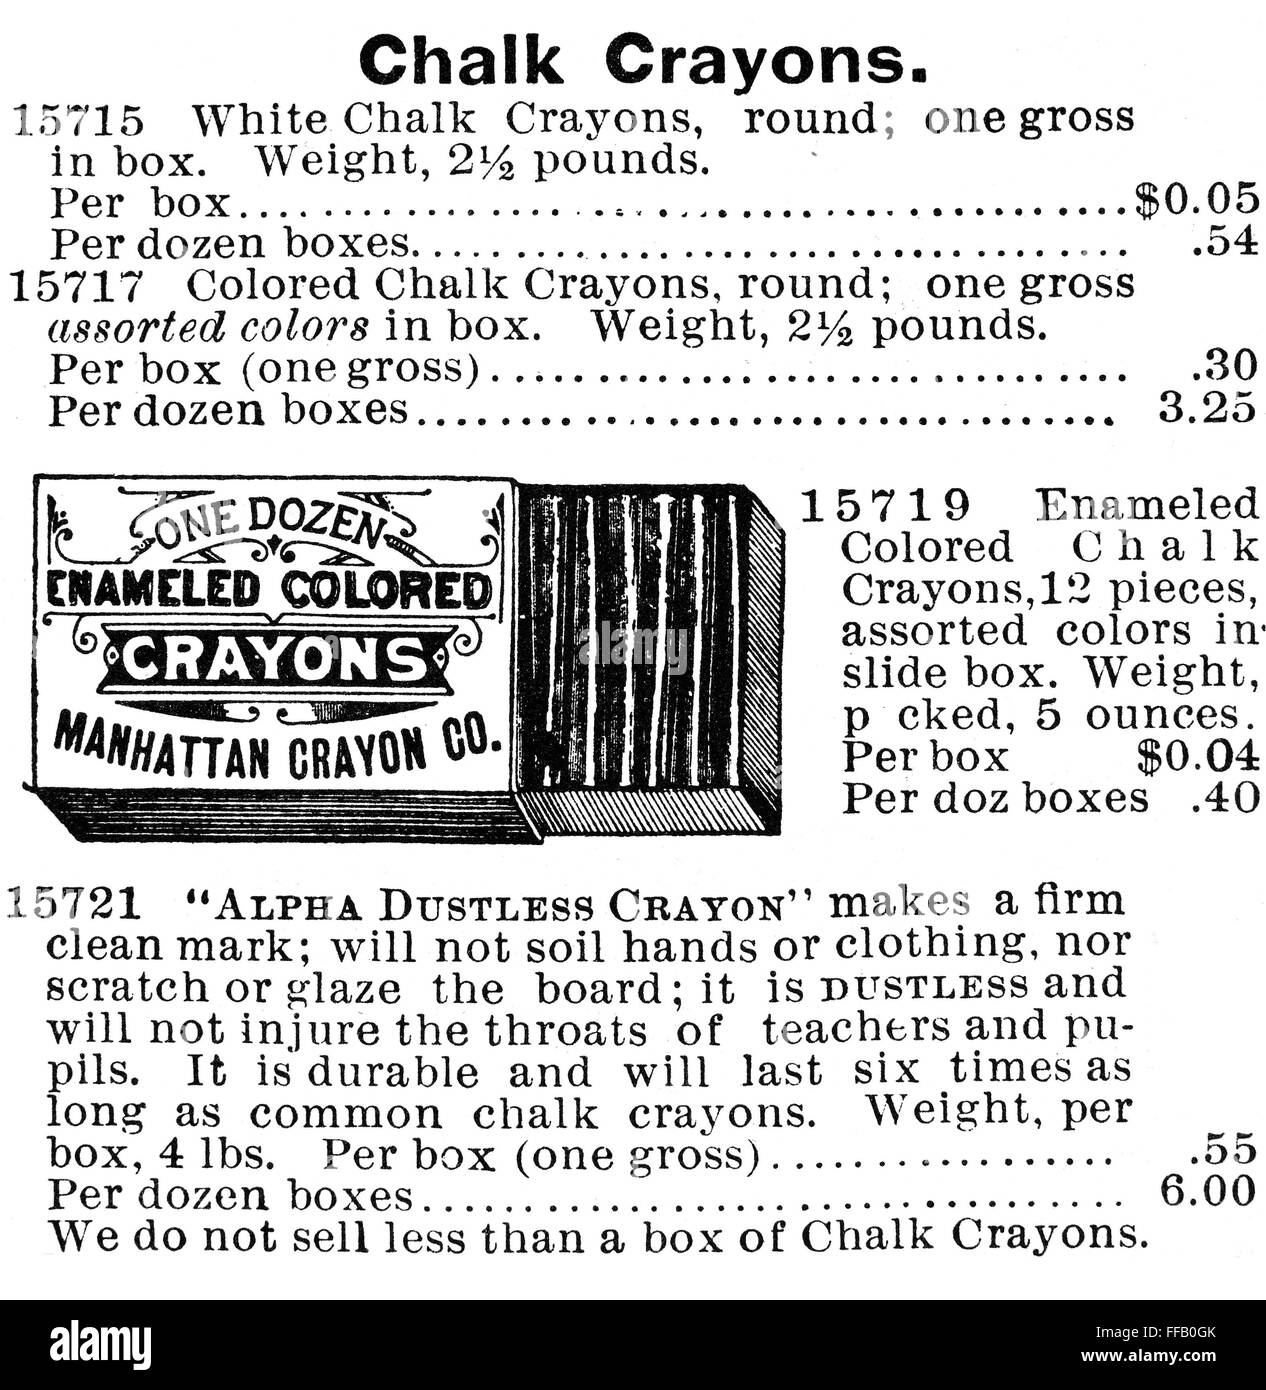 CHALK CRAYON ADVERTISEMENT. /nAmerican catalogue advertisement, 1895. Stock Photo